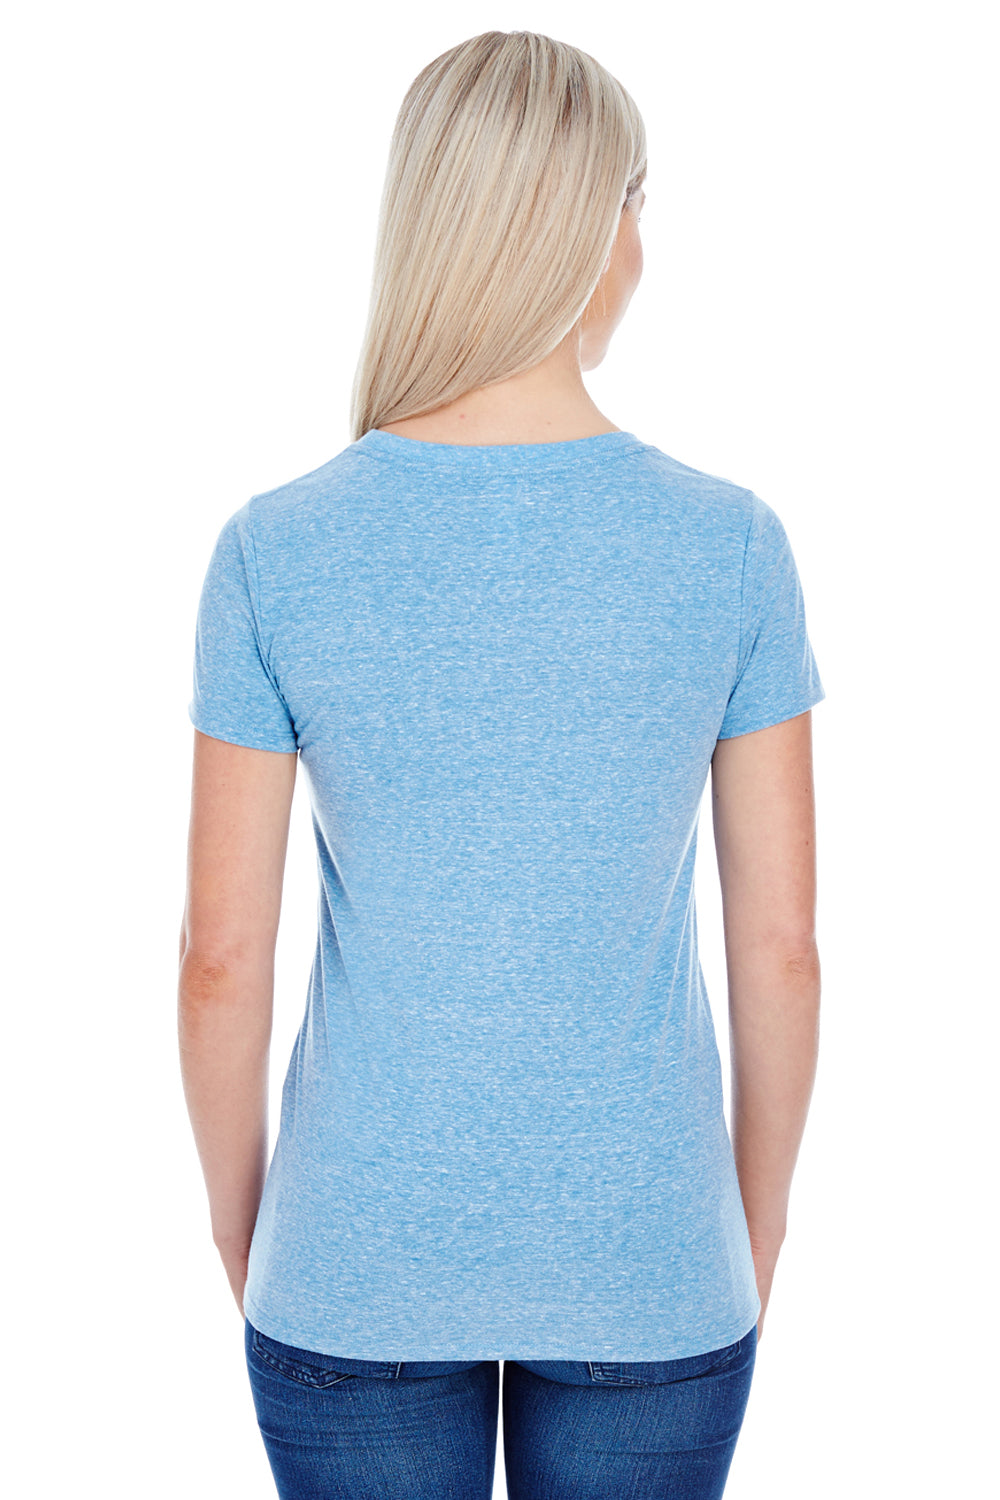 Threadfast Apparel 202A Womens Short Sleeve Crewneck T-Shirt Royal Blue Back